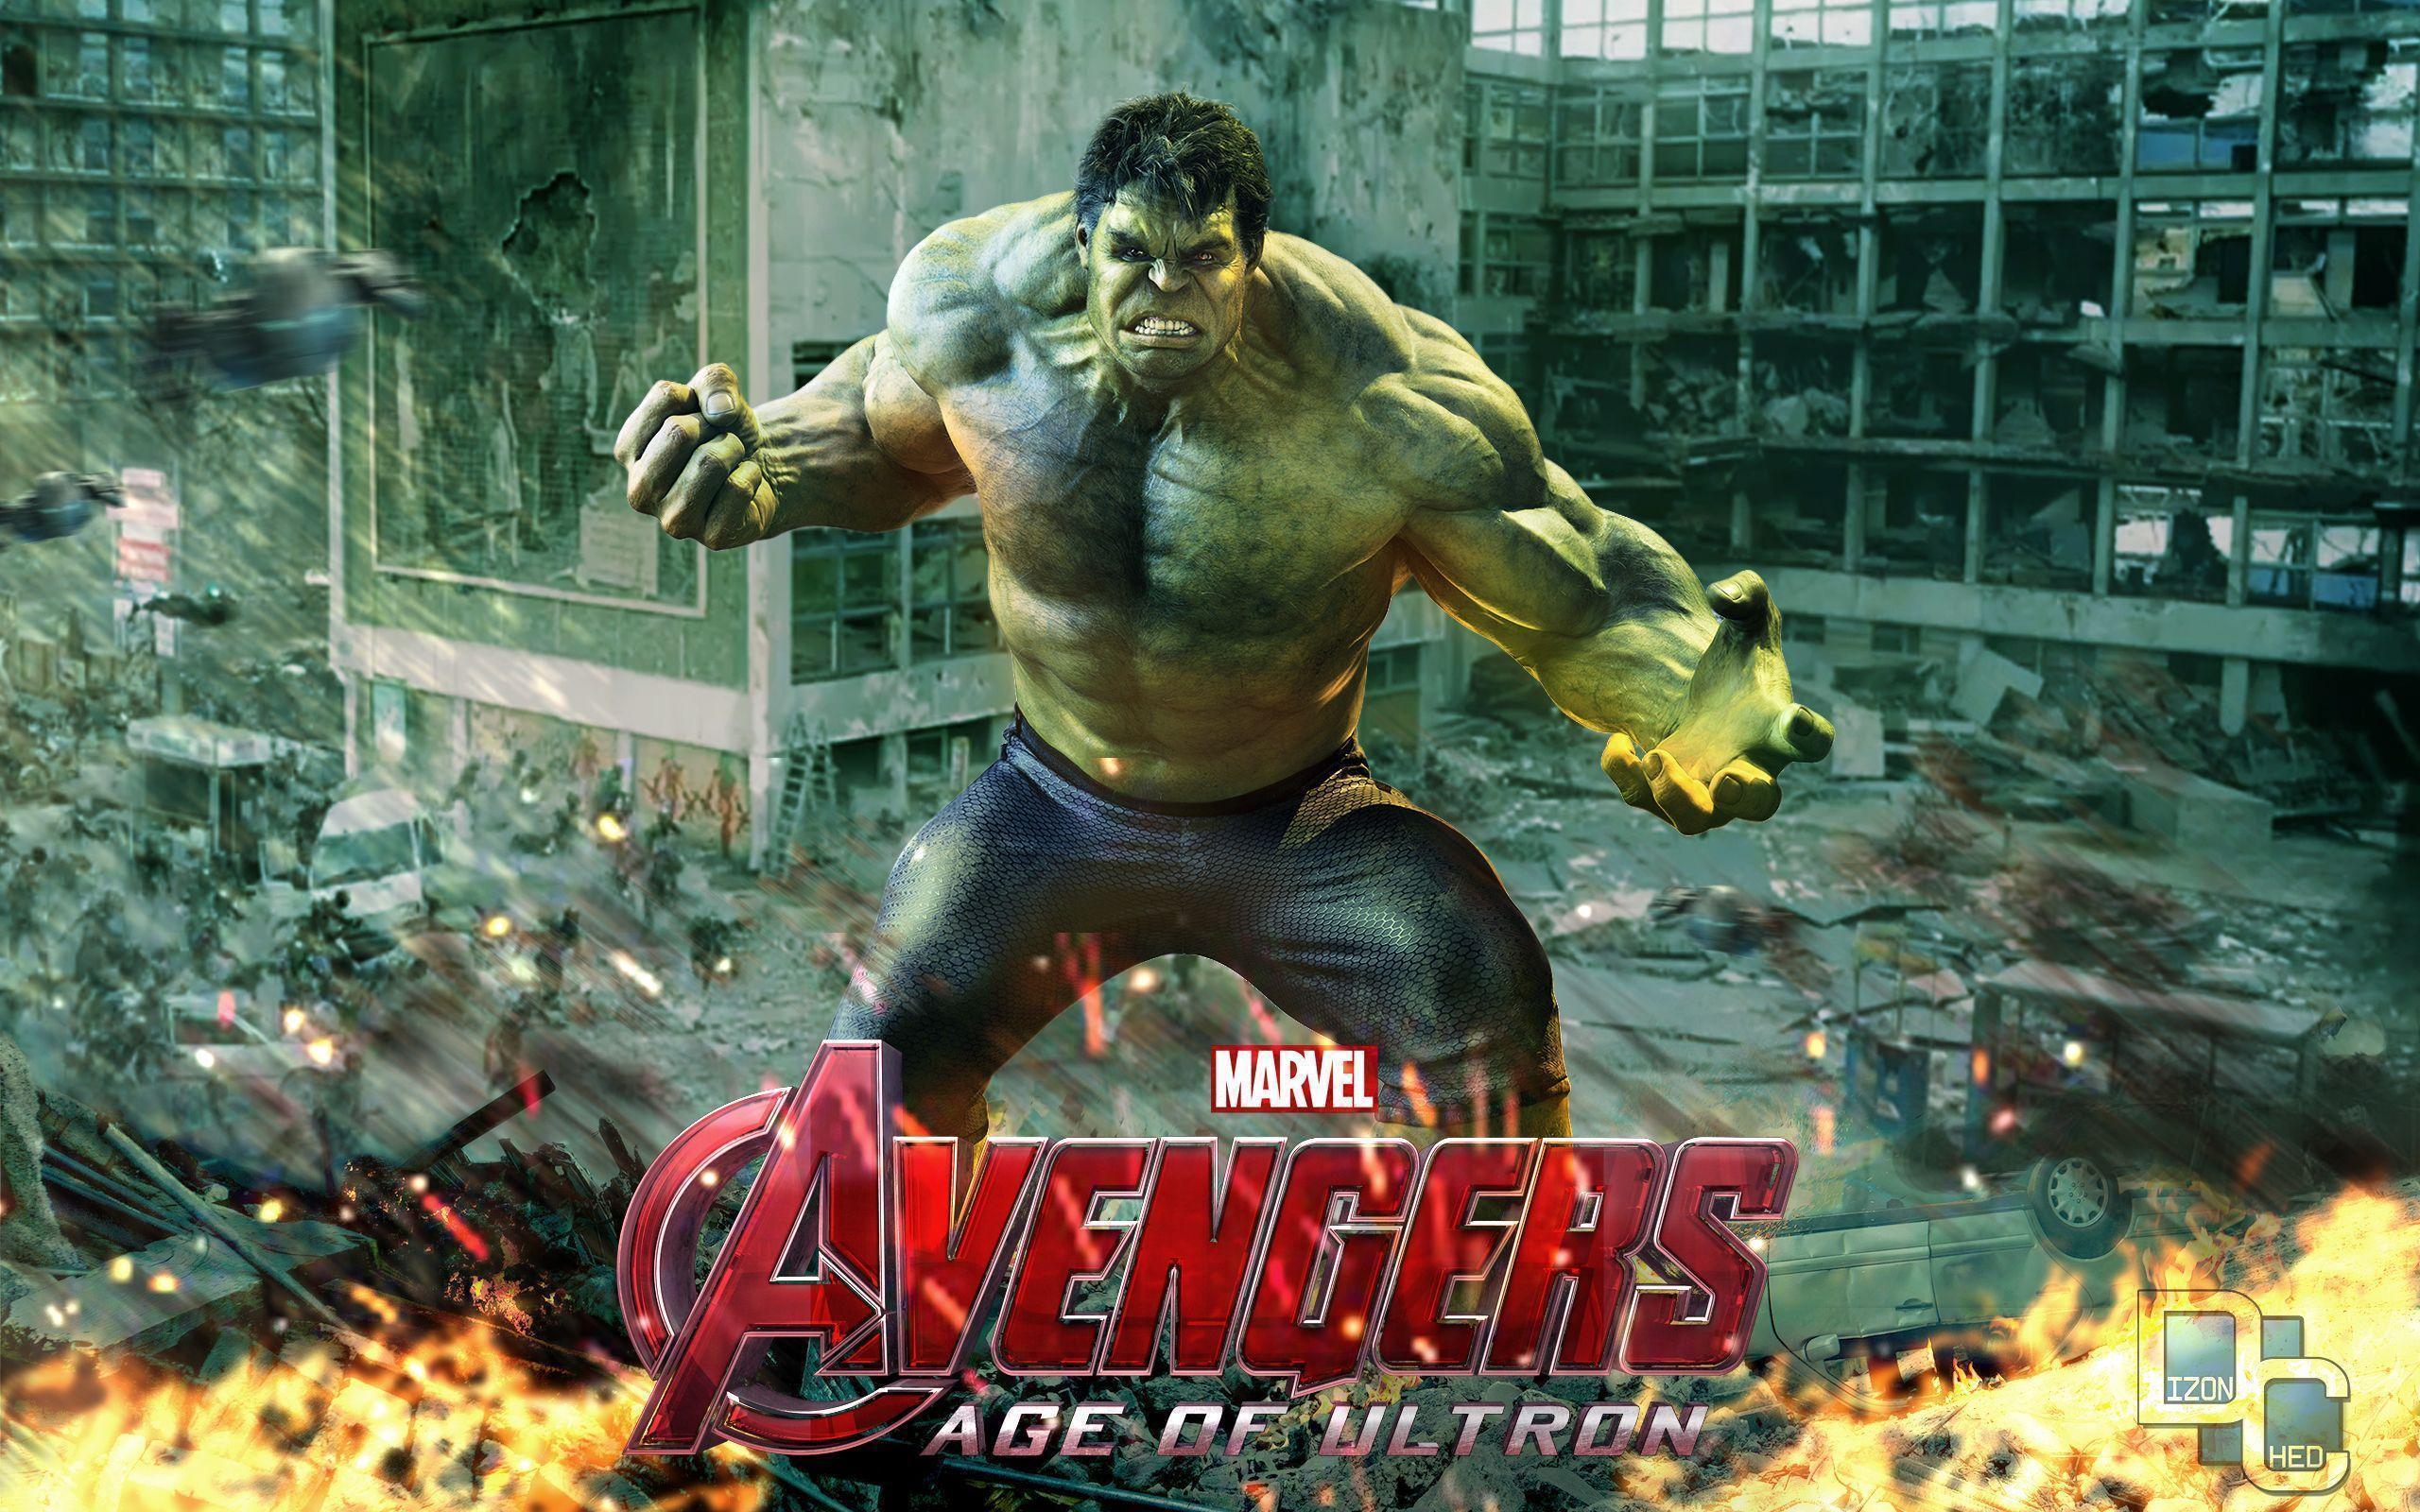 Avengers Age of Ultron: The Incredible Hulk